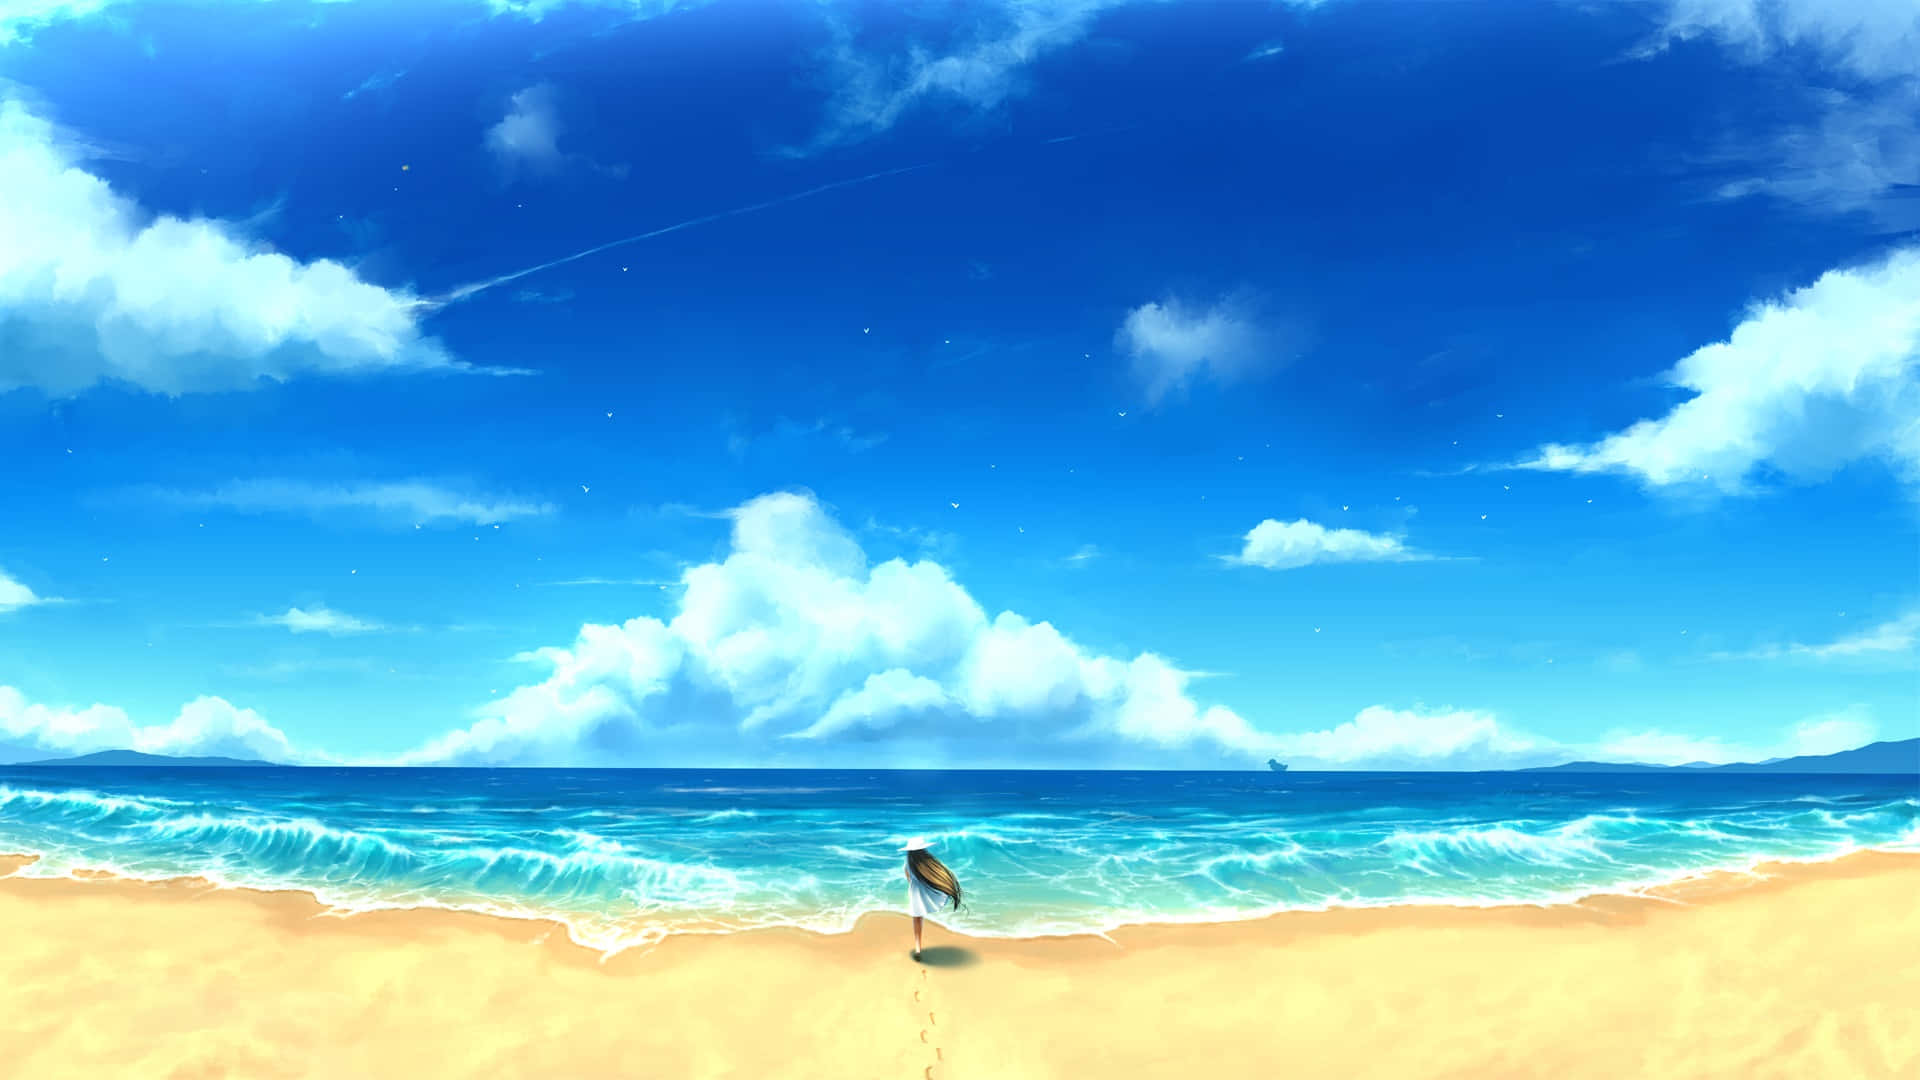 Anime Seaside landscape by Roganvalde on DeviantArt